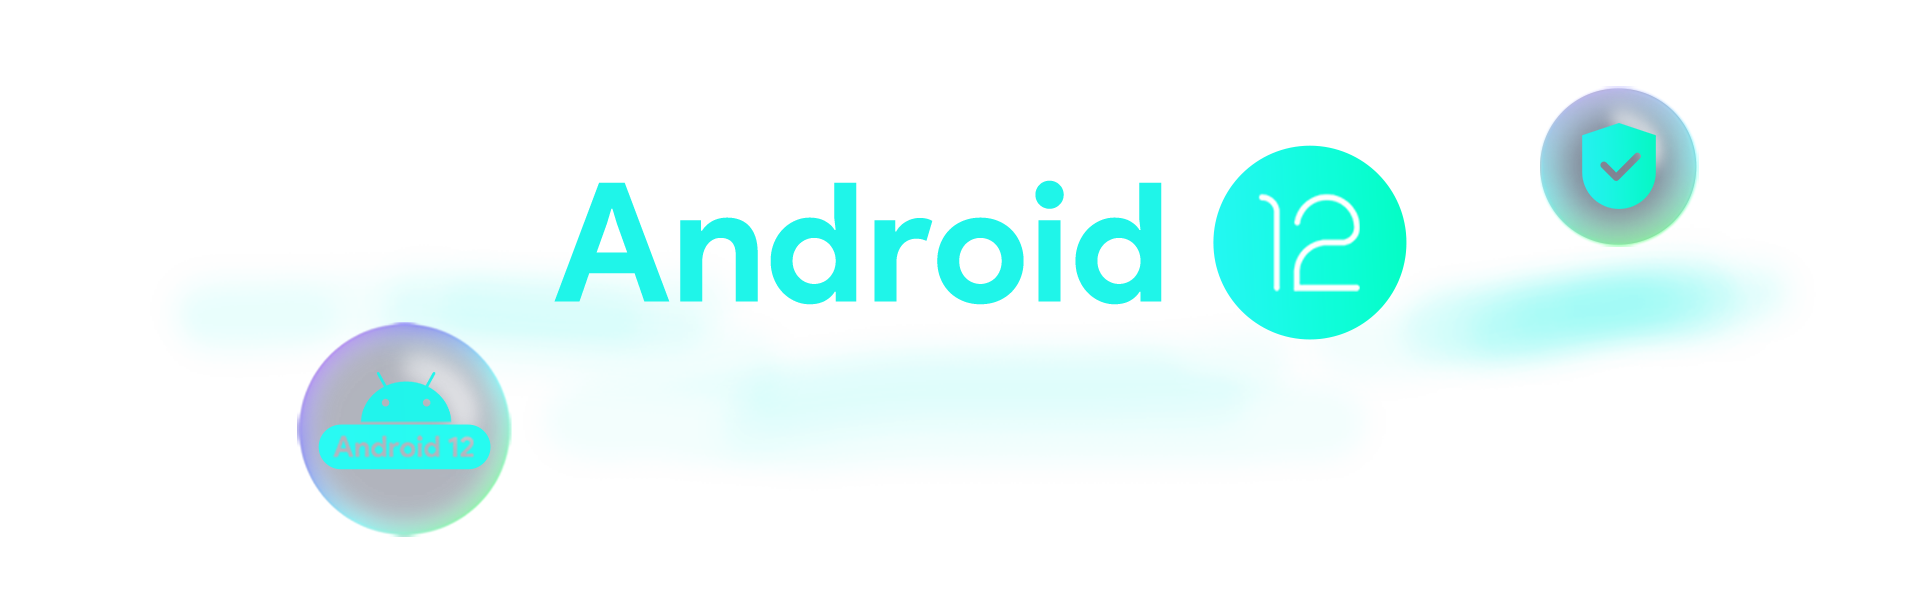 Android Microsoft Teams Phone